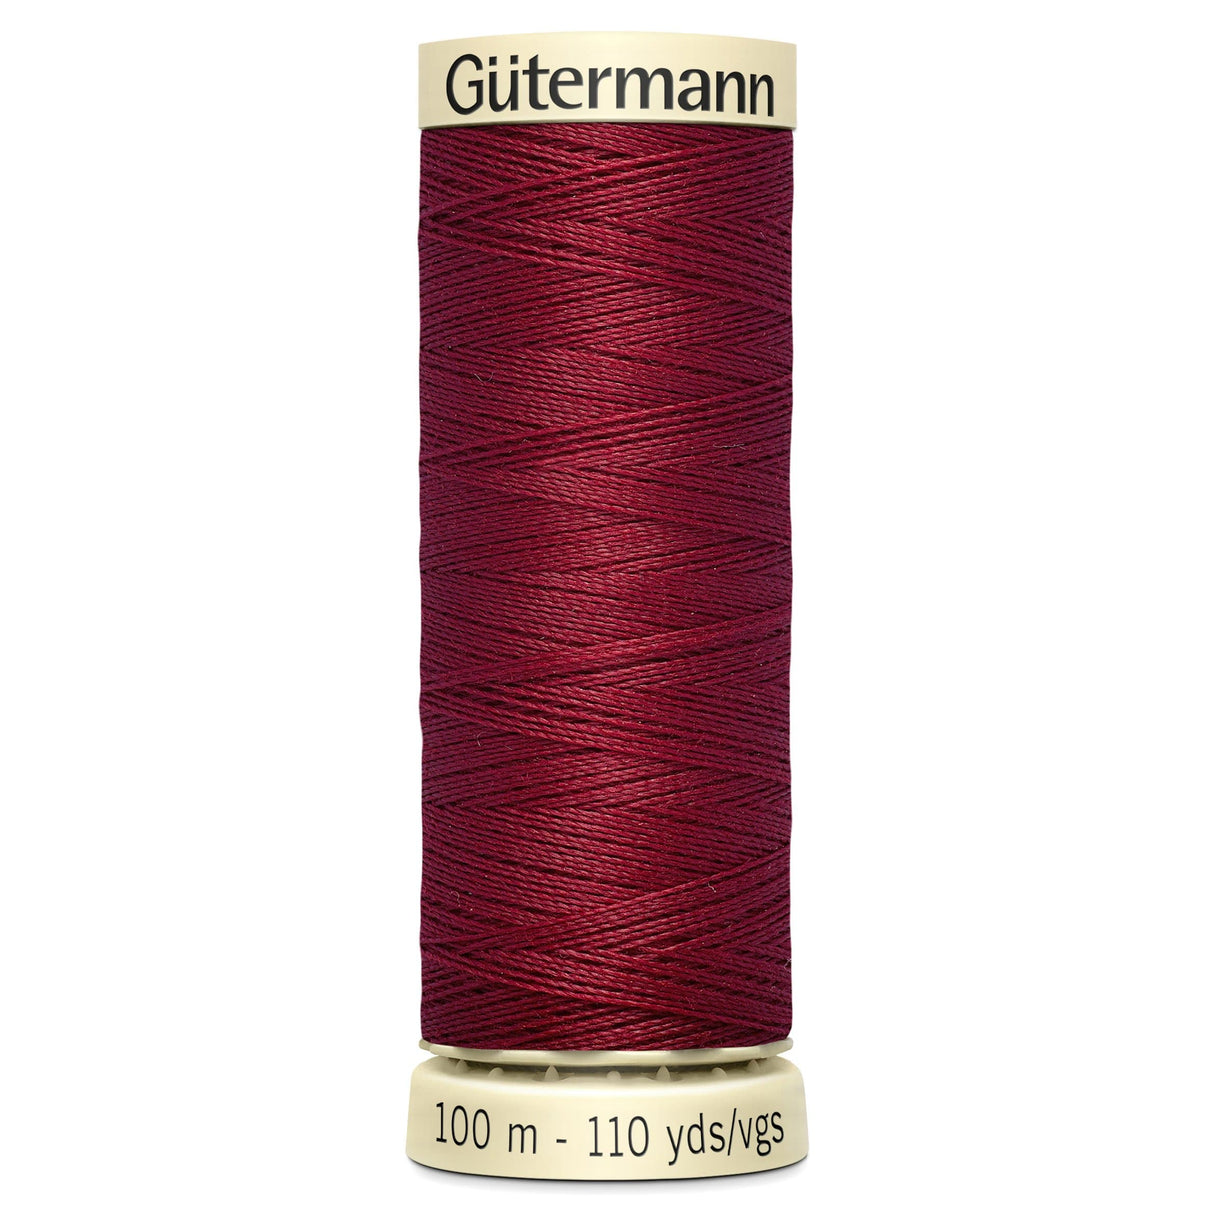 Groves Haberdashery 226 Gutermann Thread Sewing Cotton 100 m Black to Pink